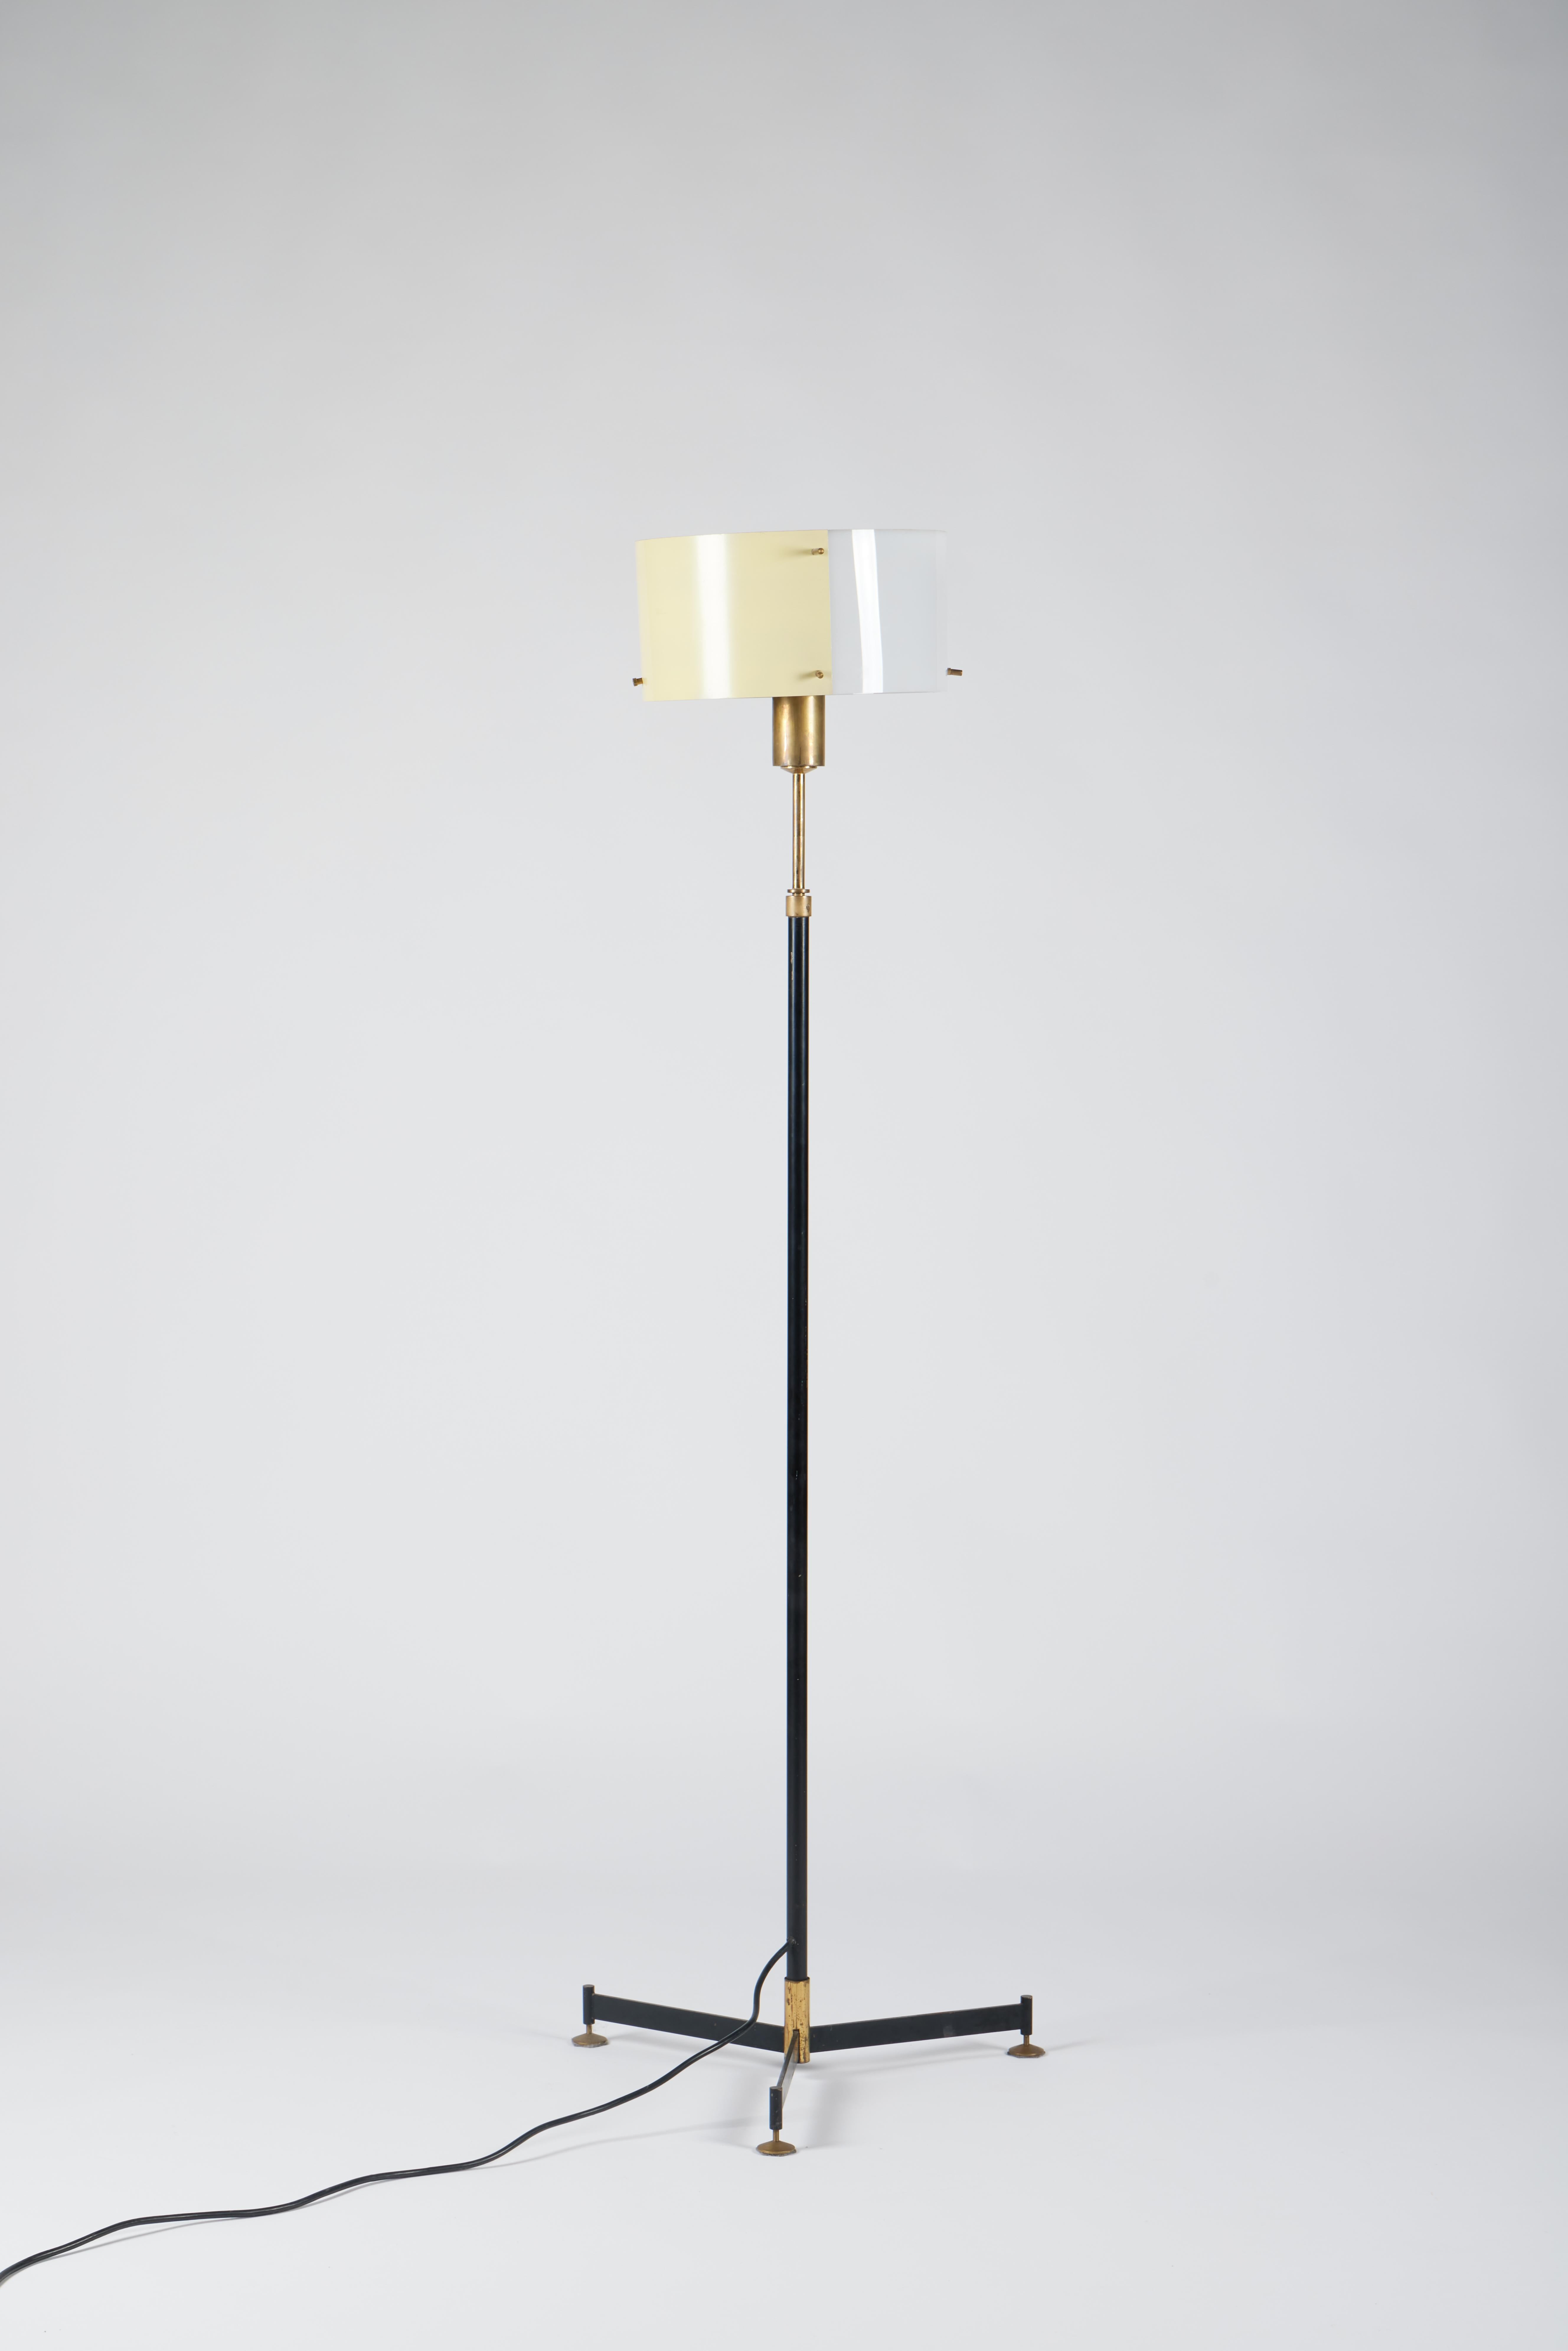 Mid-20th Century Italian Mid-Century, Modern Floor Lamp with Adjustable Height by Stilnovo, 1950s For Sale